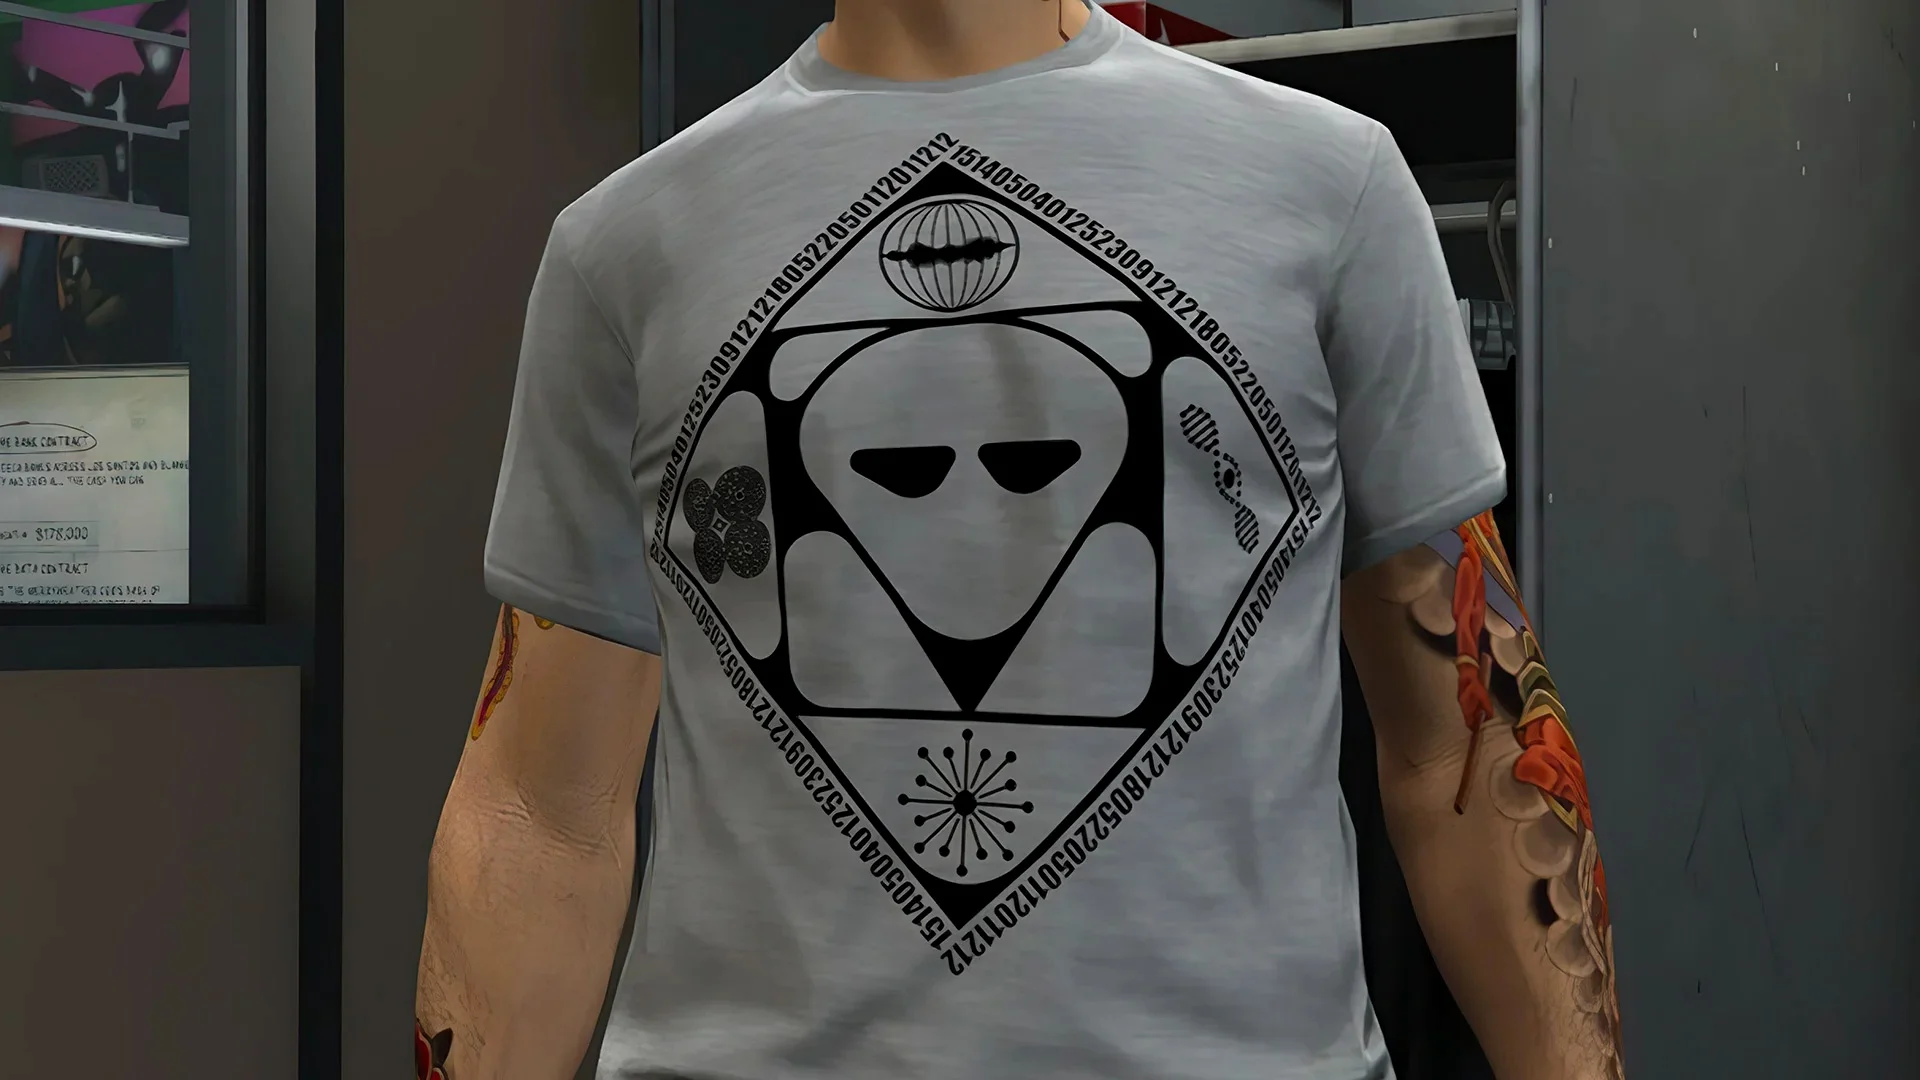 Дата анонса GTA 6 была на футболке в GTA Online